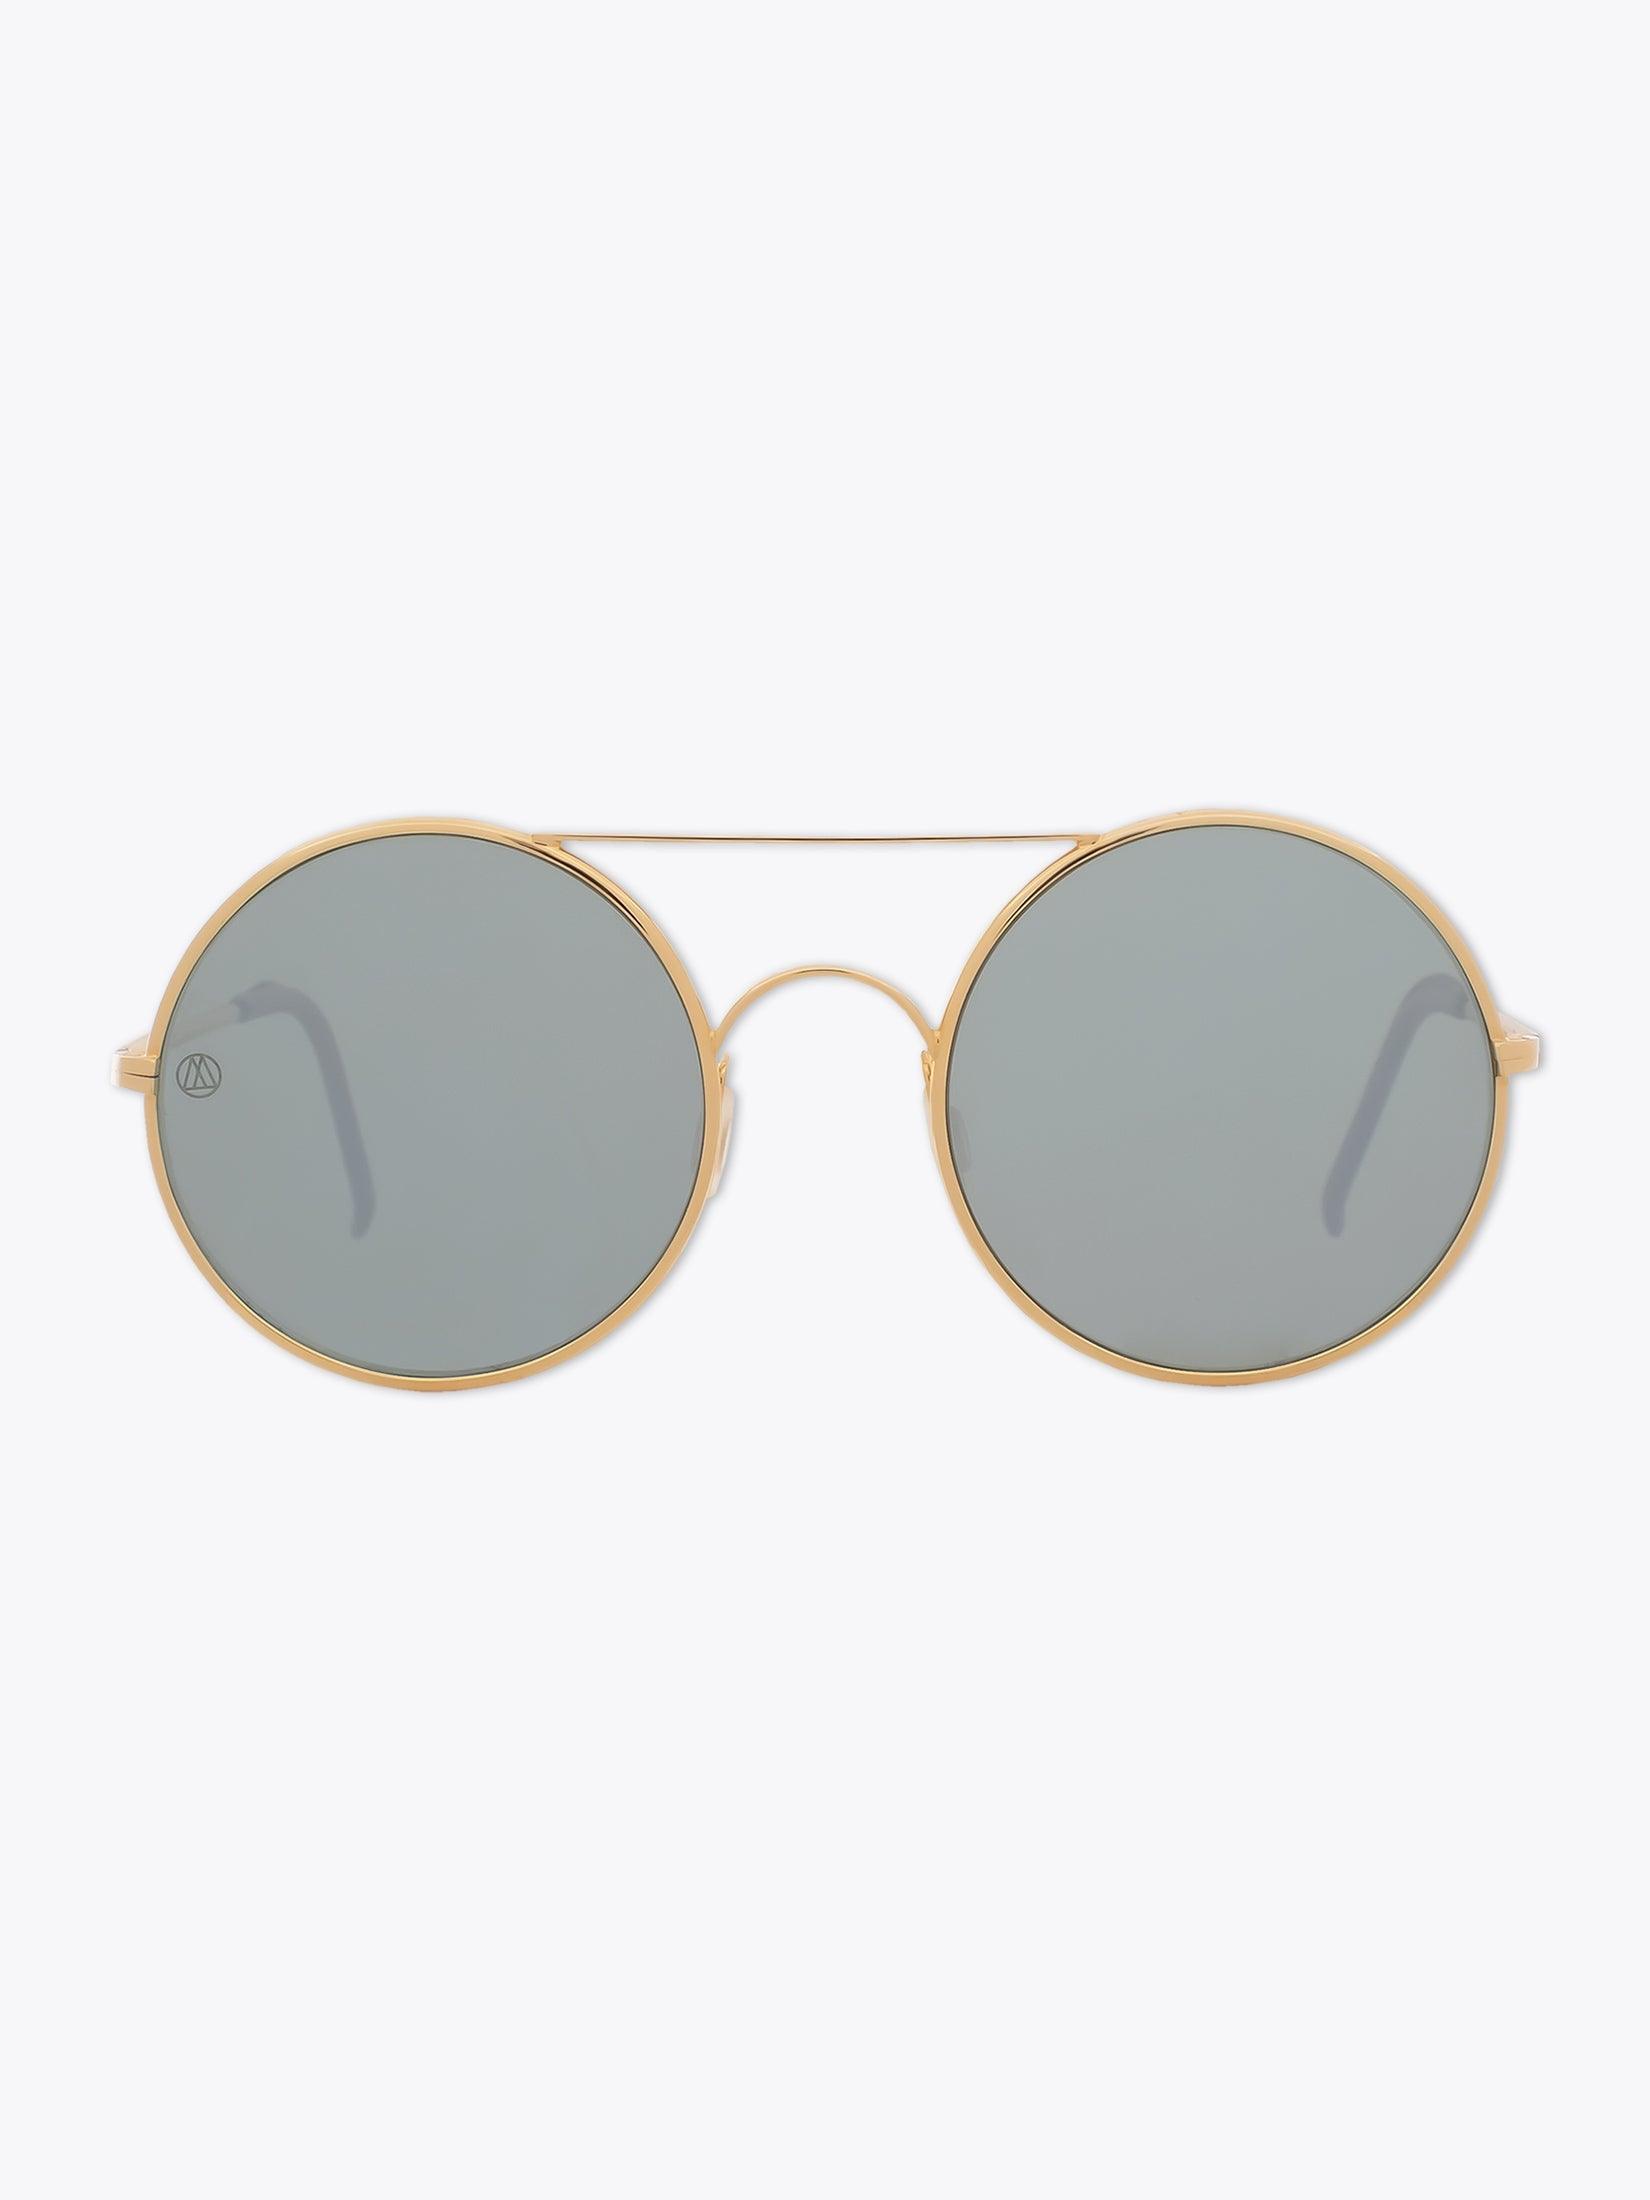 8000 Eyewear 8M4 Gold-Tone Round Sunglasses